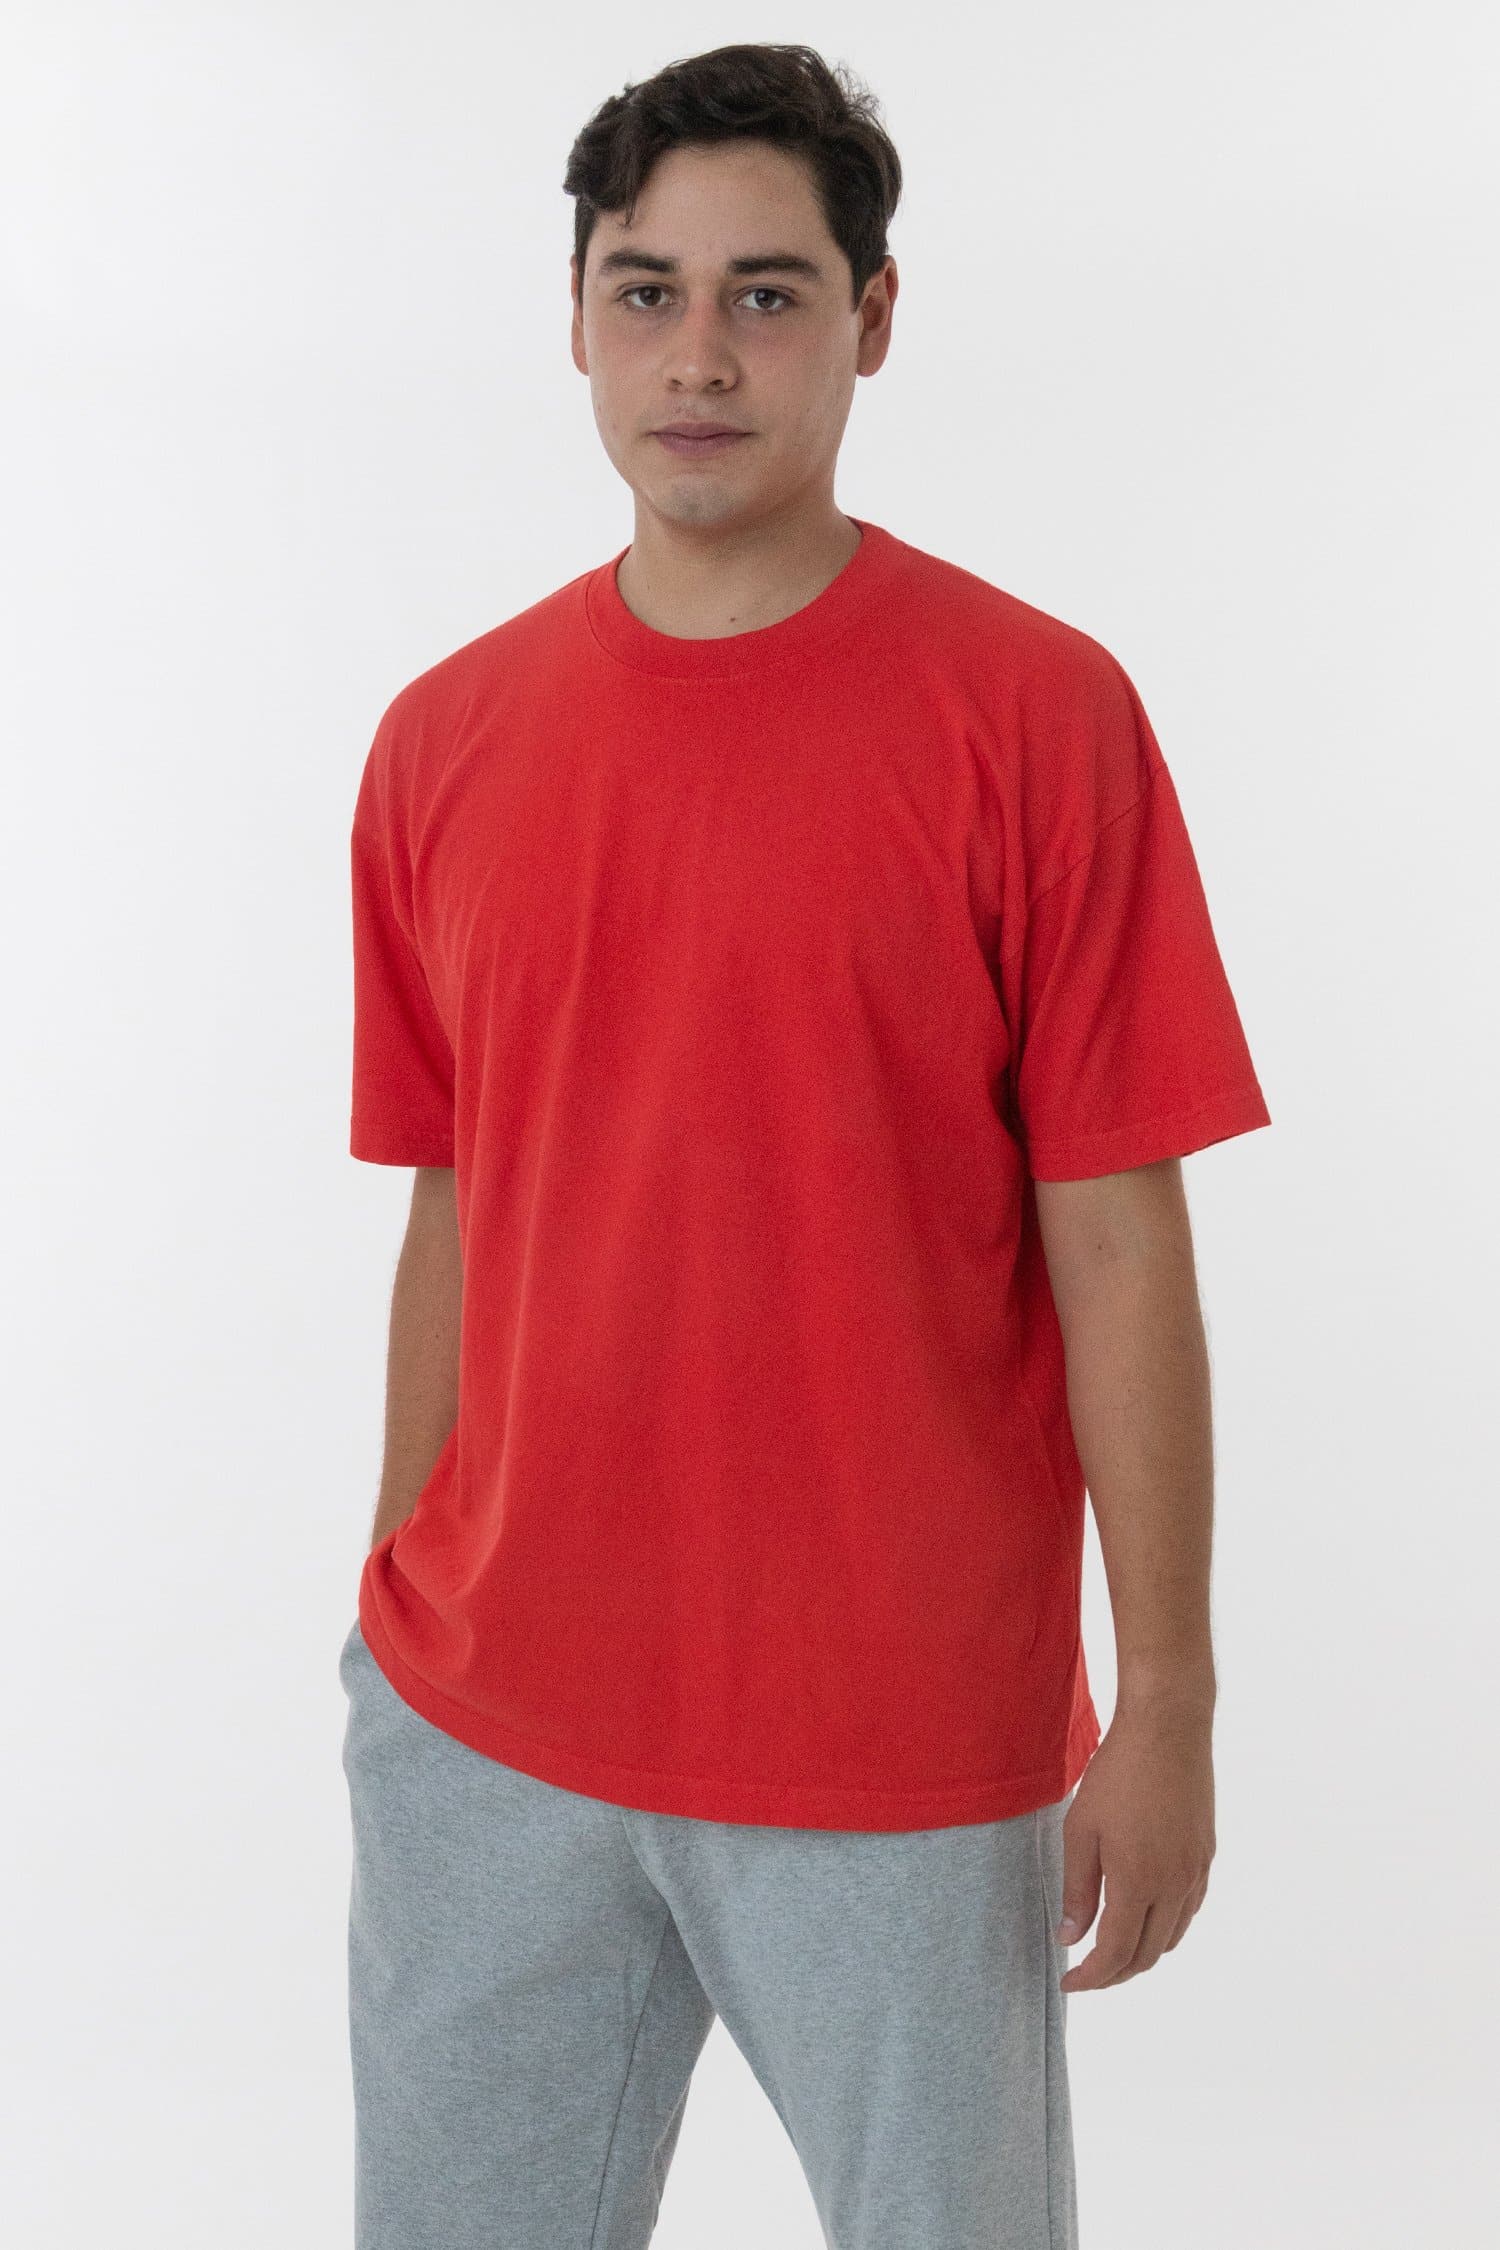 Los Angeles Apparel TR01 USA-Made Triblend T-Shirt